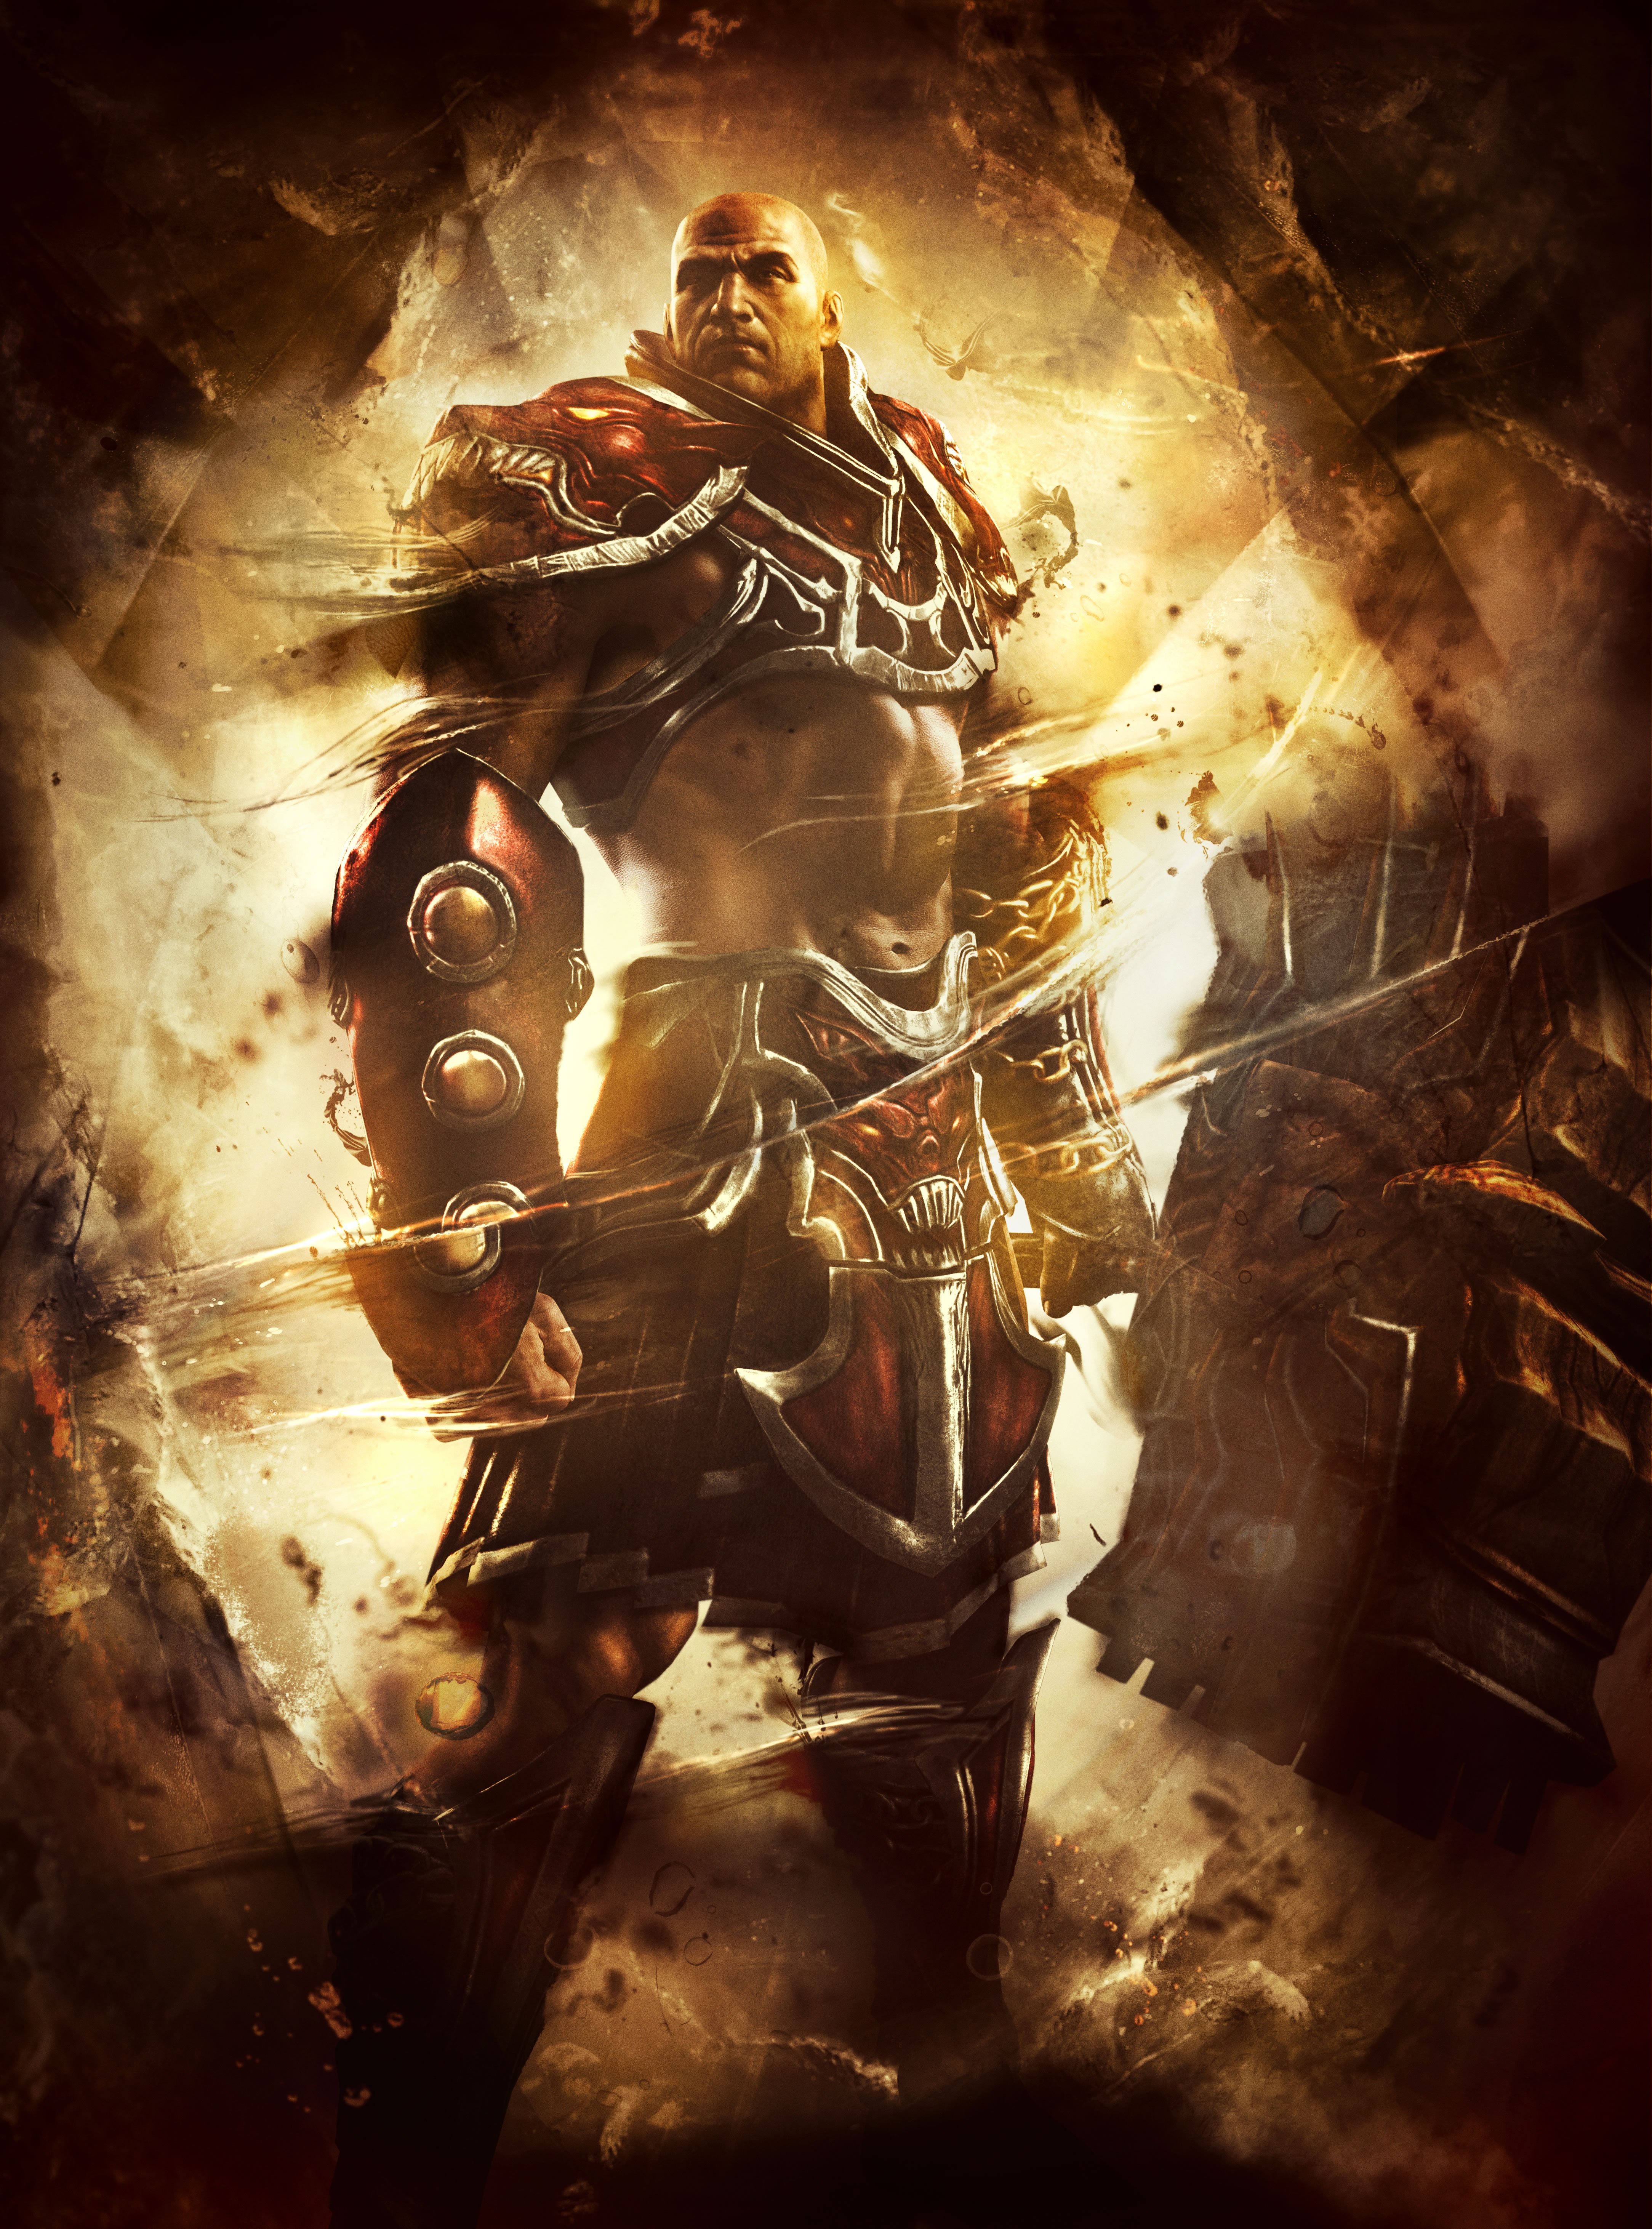 god of war 3 pc free download